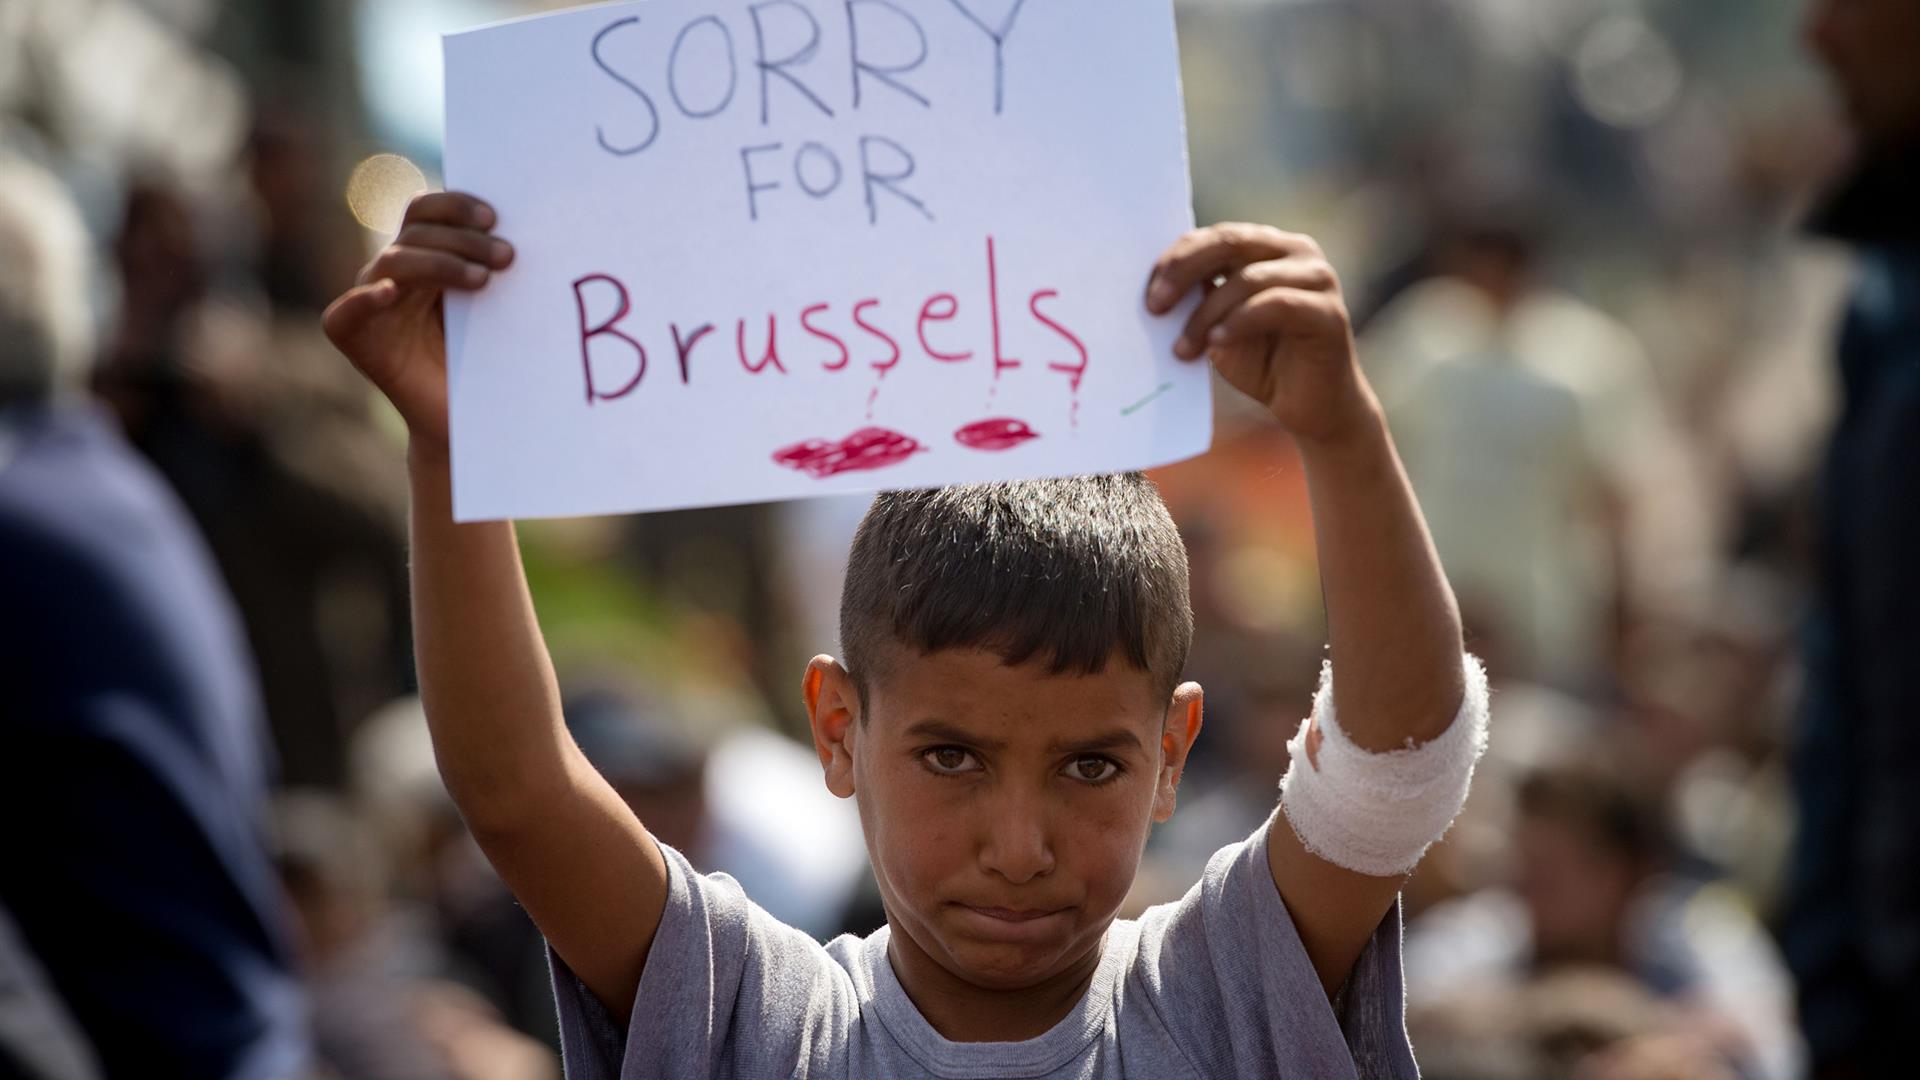 Sorryfor Brussels